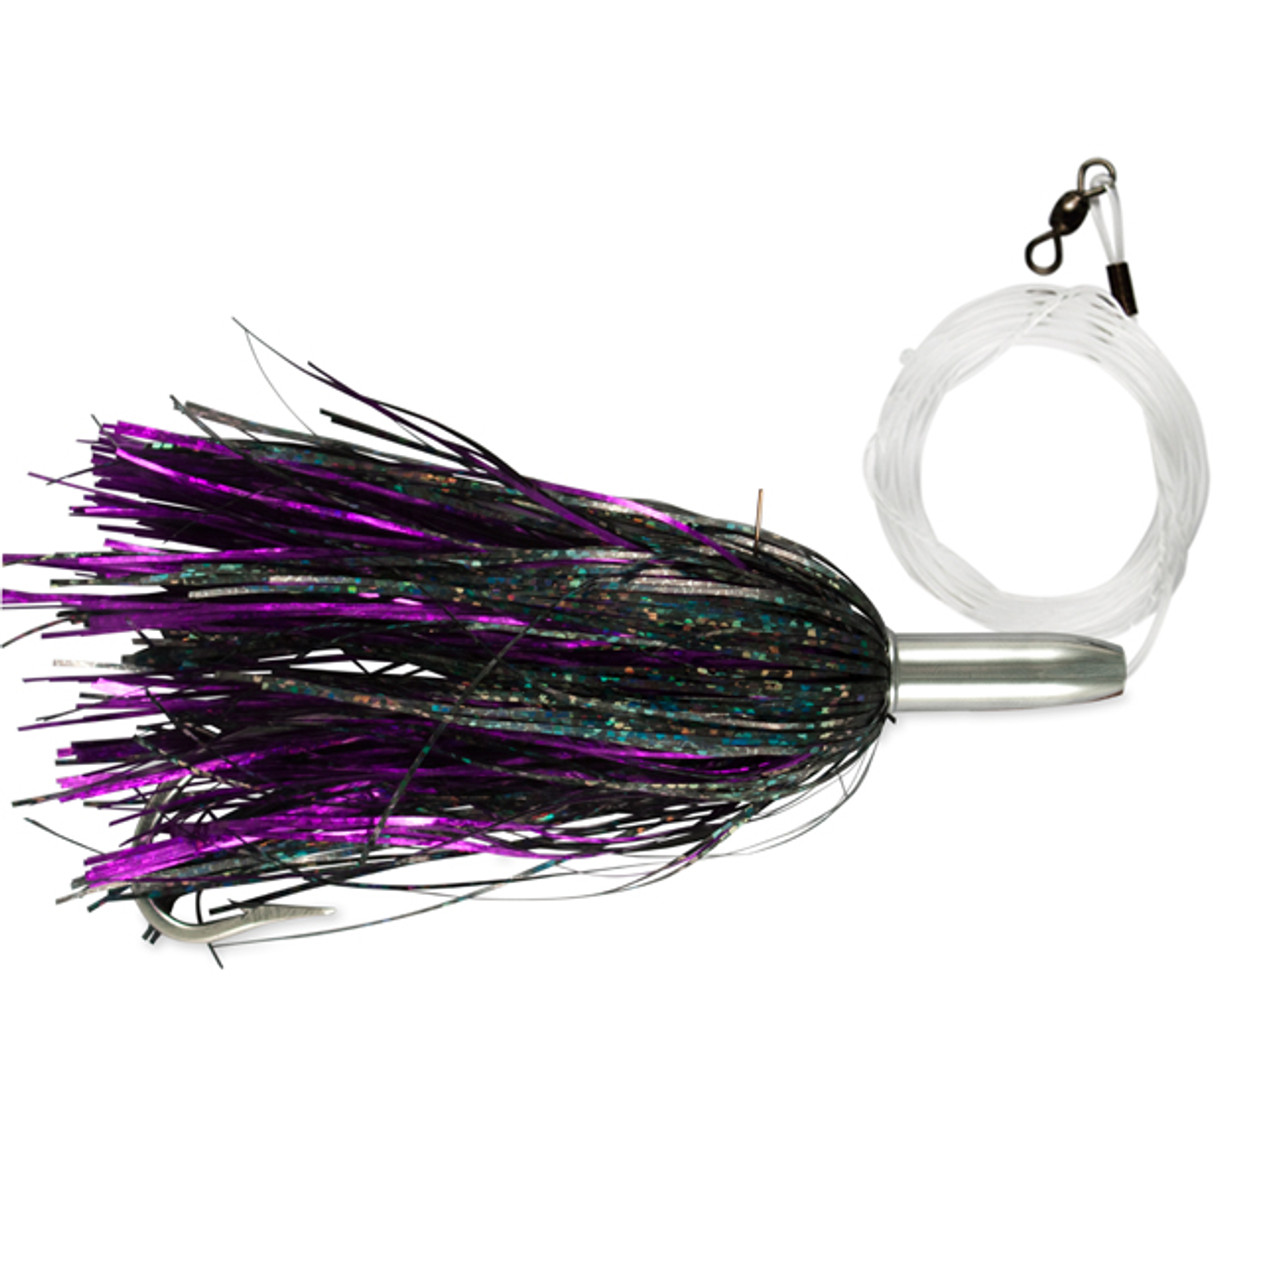 Billy Baits - Mini Turbo Slammer Lure - Rigged & Ready Mono - Purple Shimmer/Black Shimmer 72 